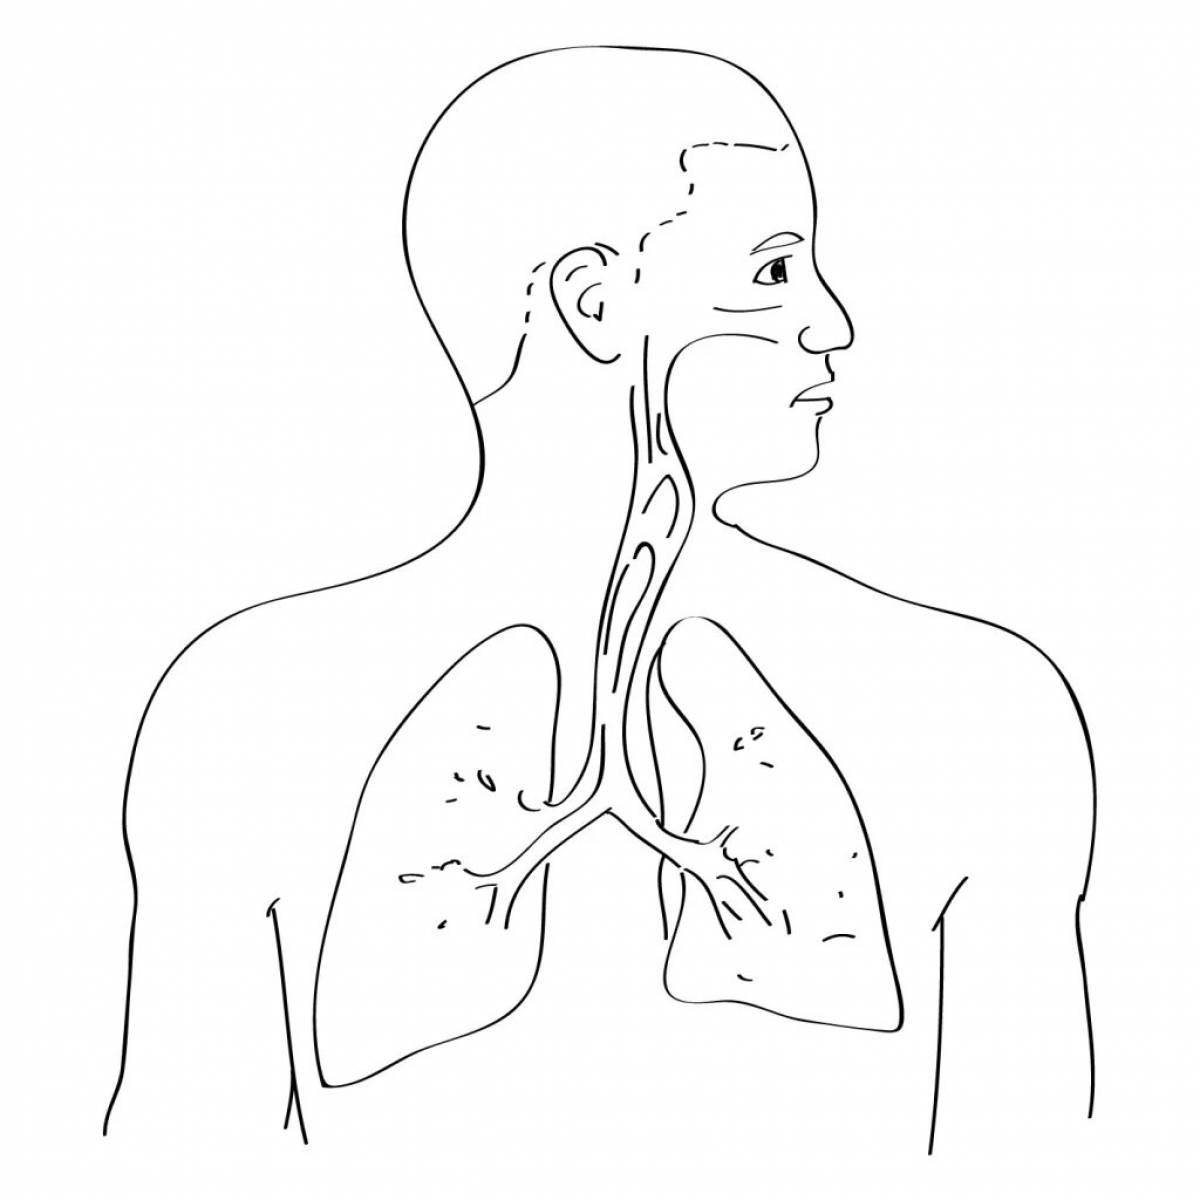 Respiratory system #19